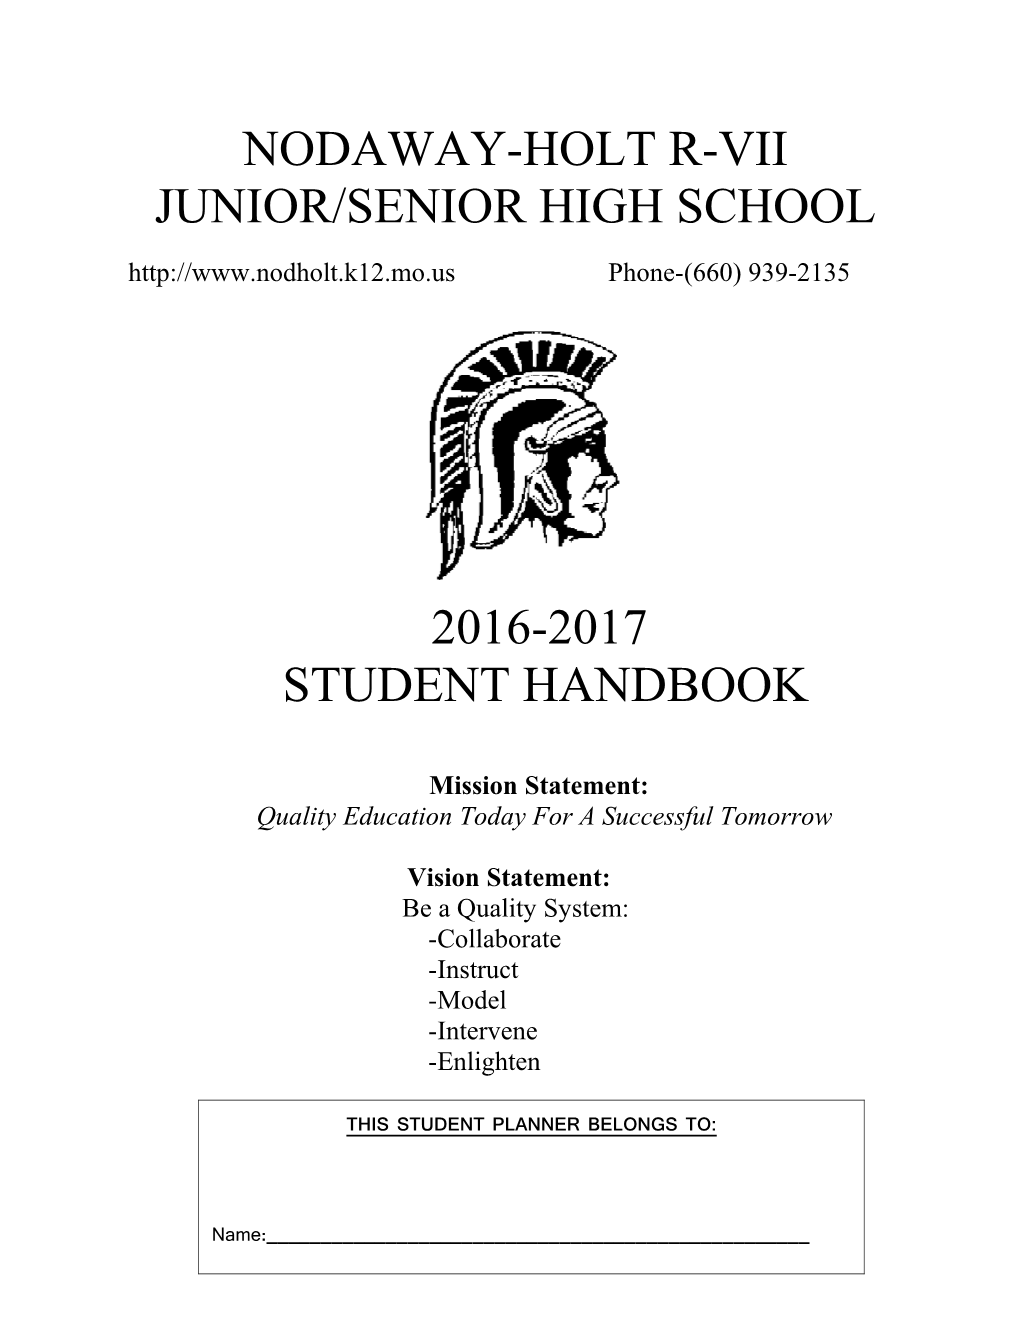 Junior/Senior High School